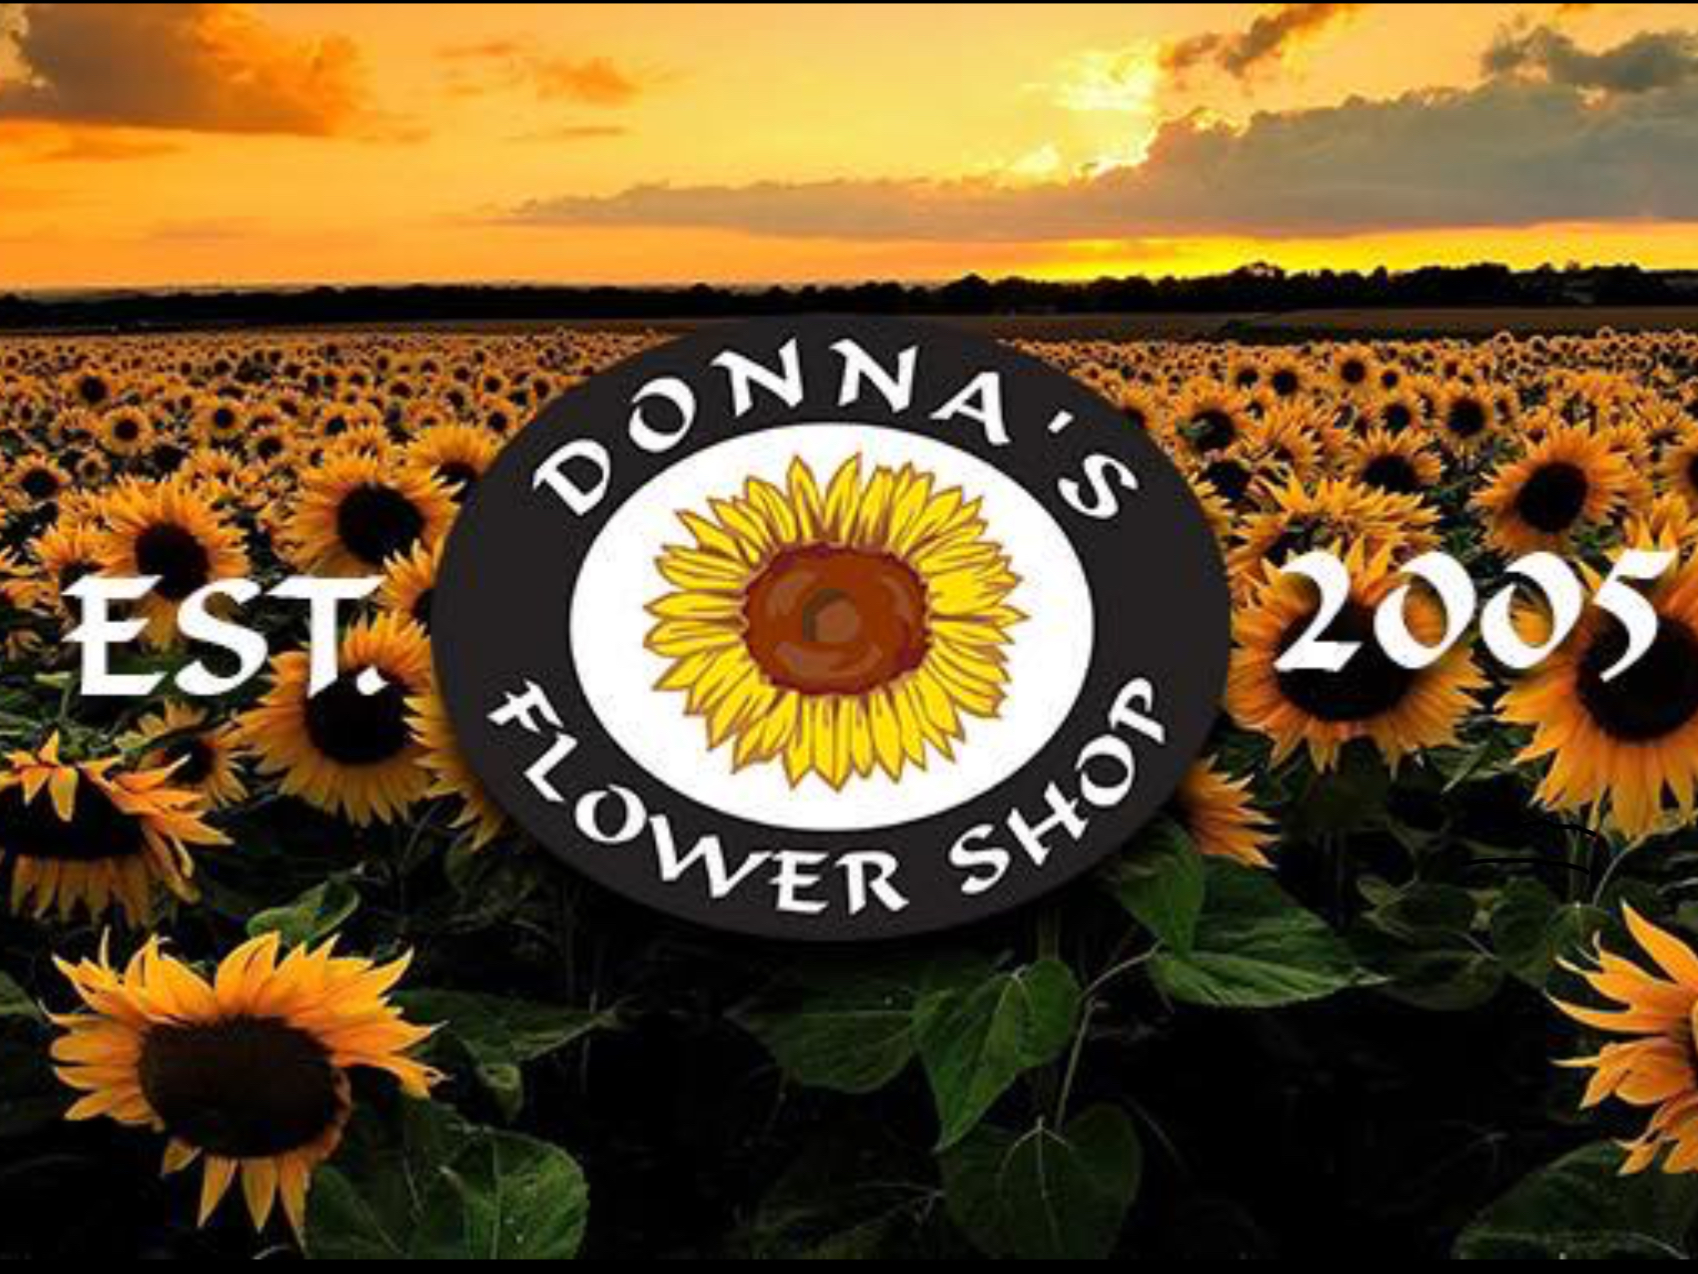 Donna’s Flower Shop